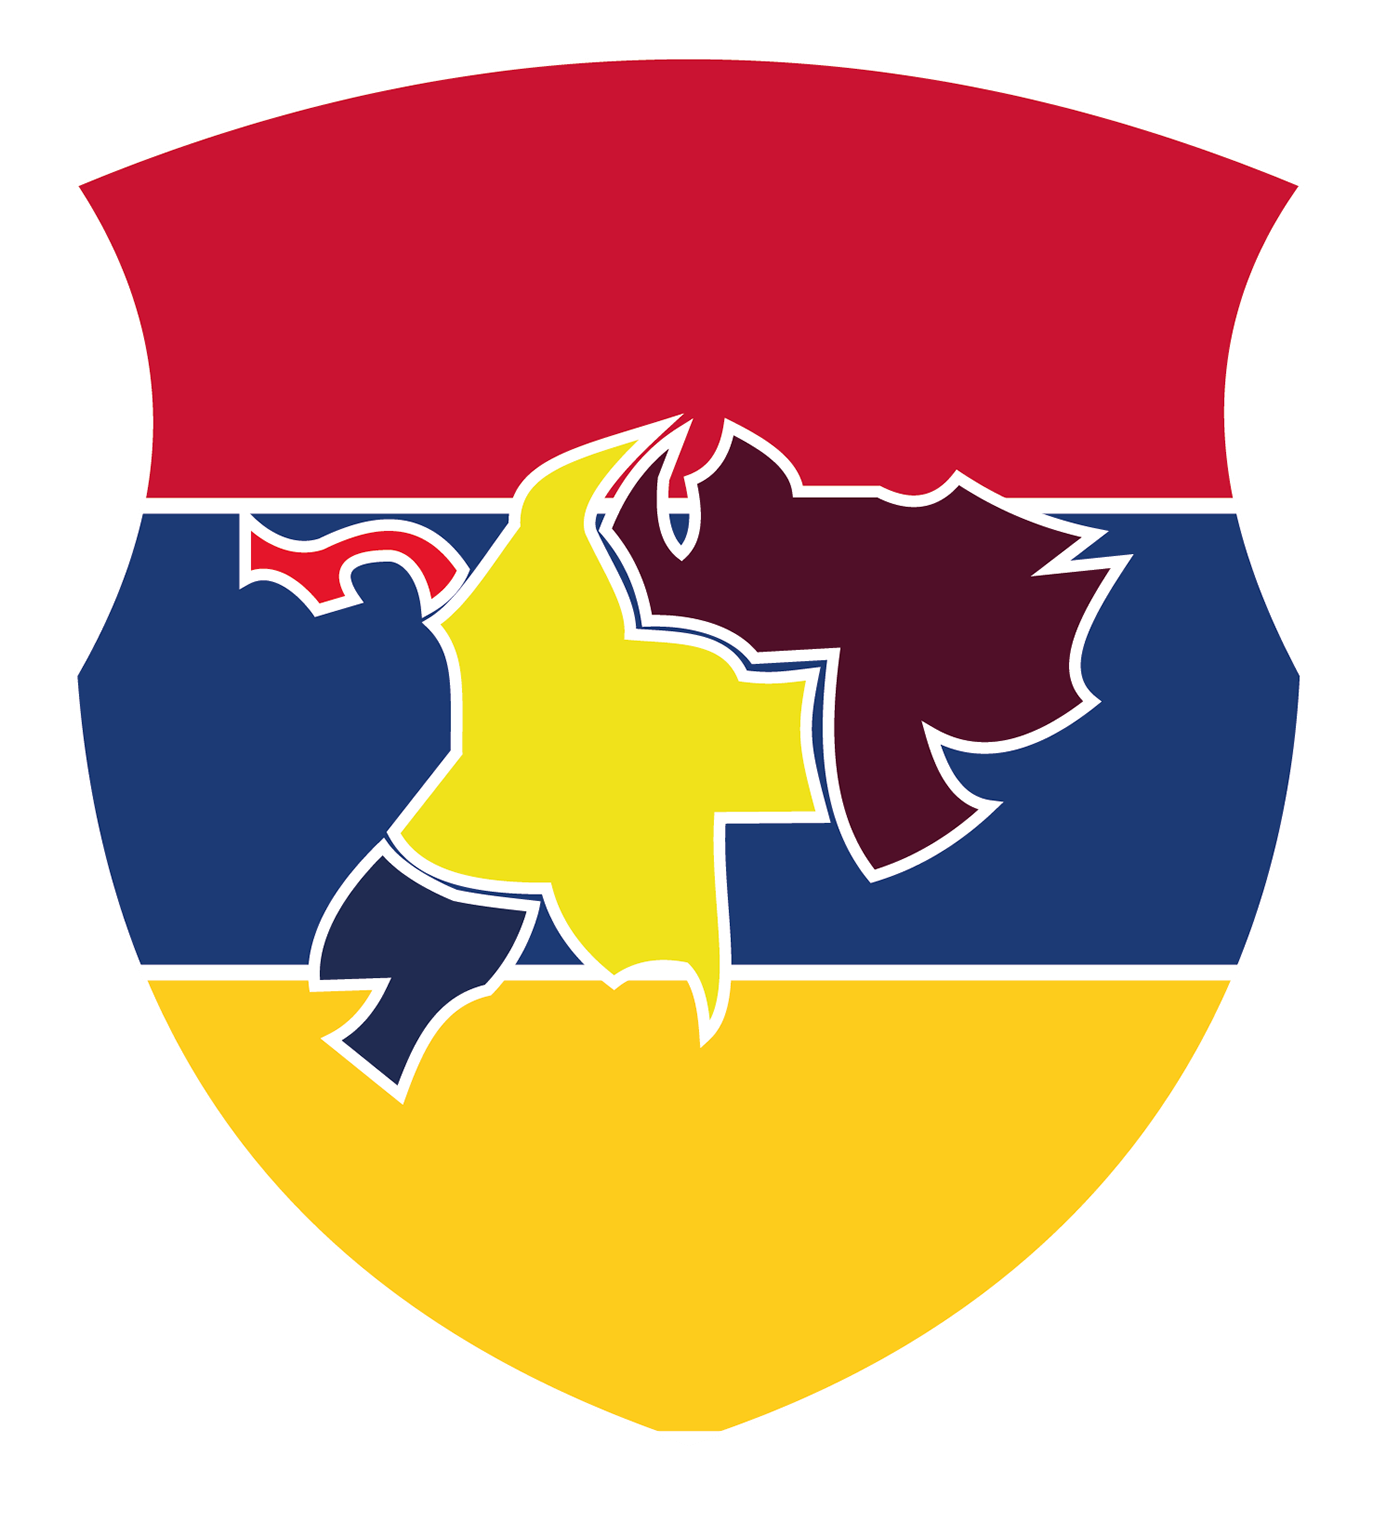 escudos futbol logos yugoslavia urss Irlanda gran bretaña Gran Colombia